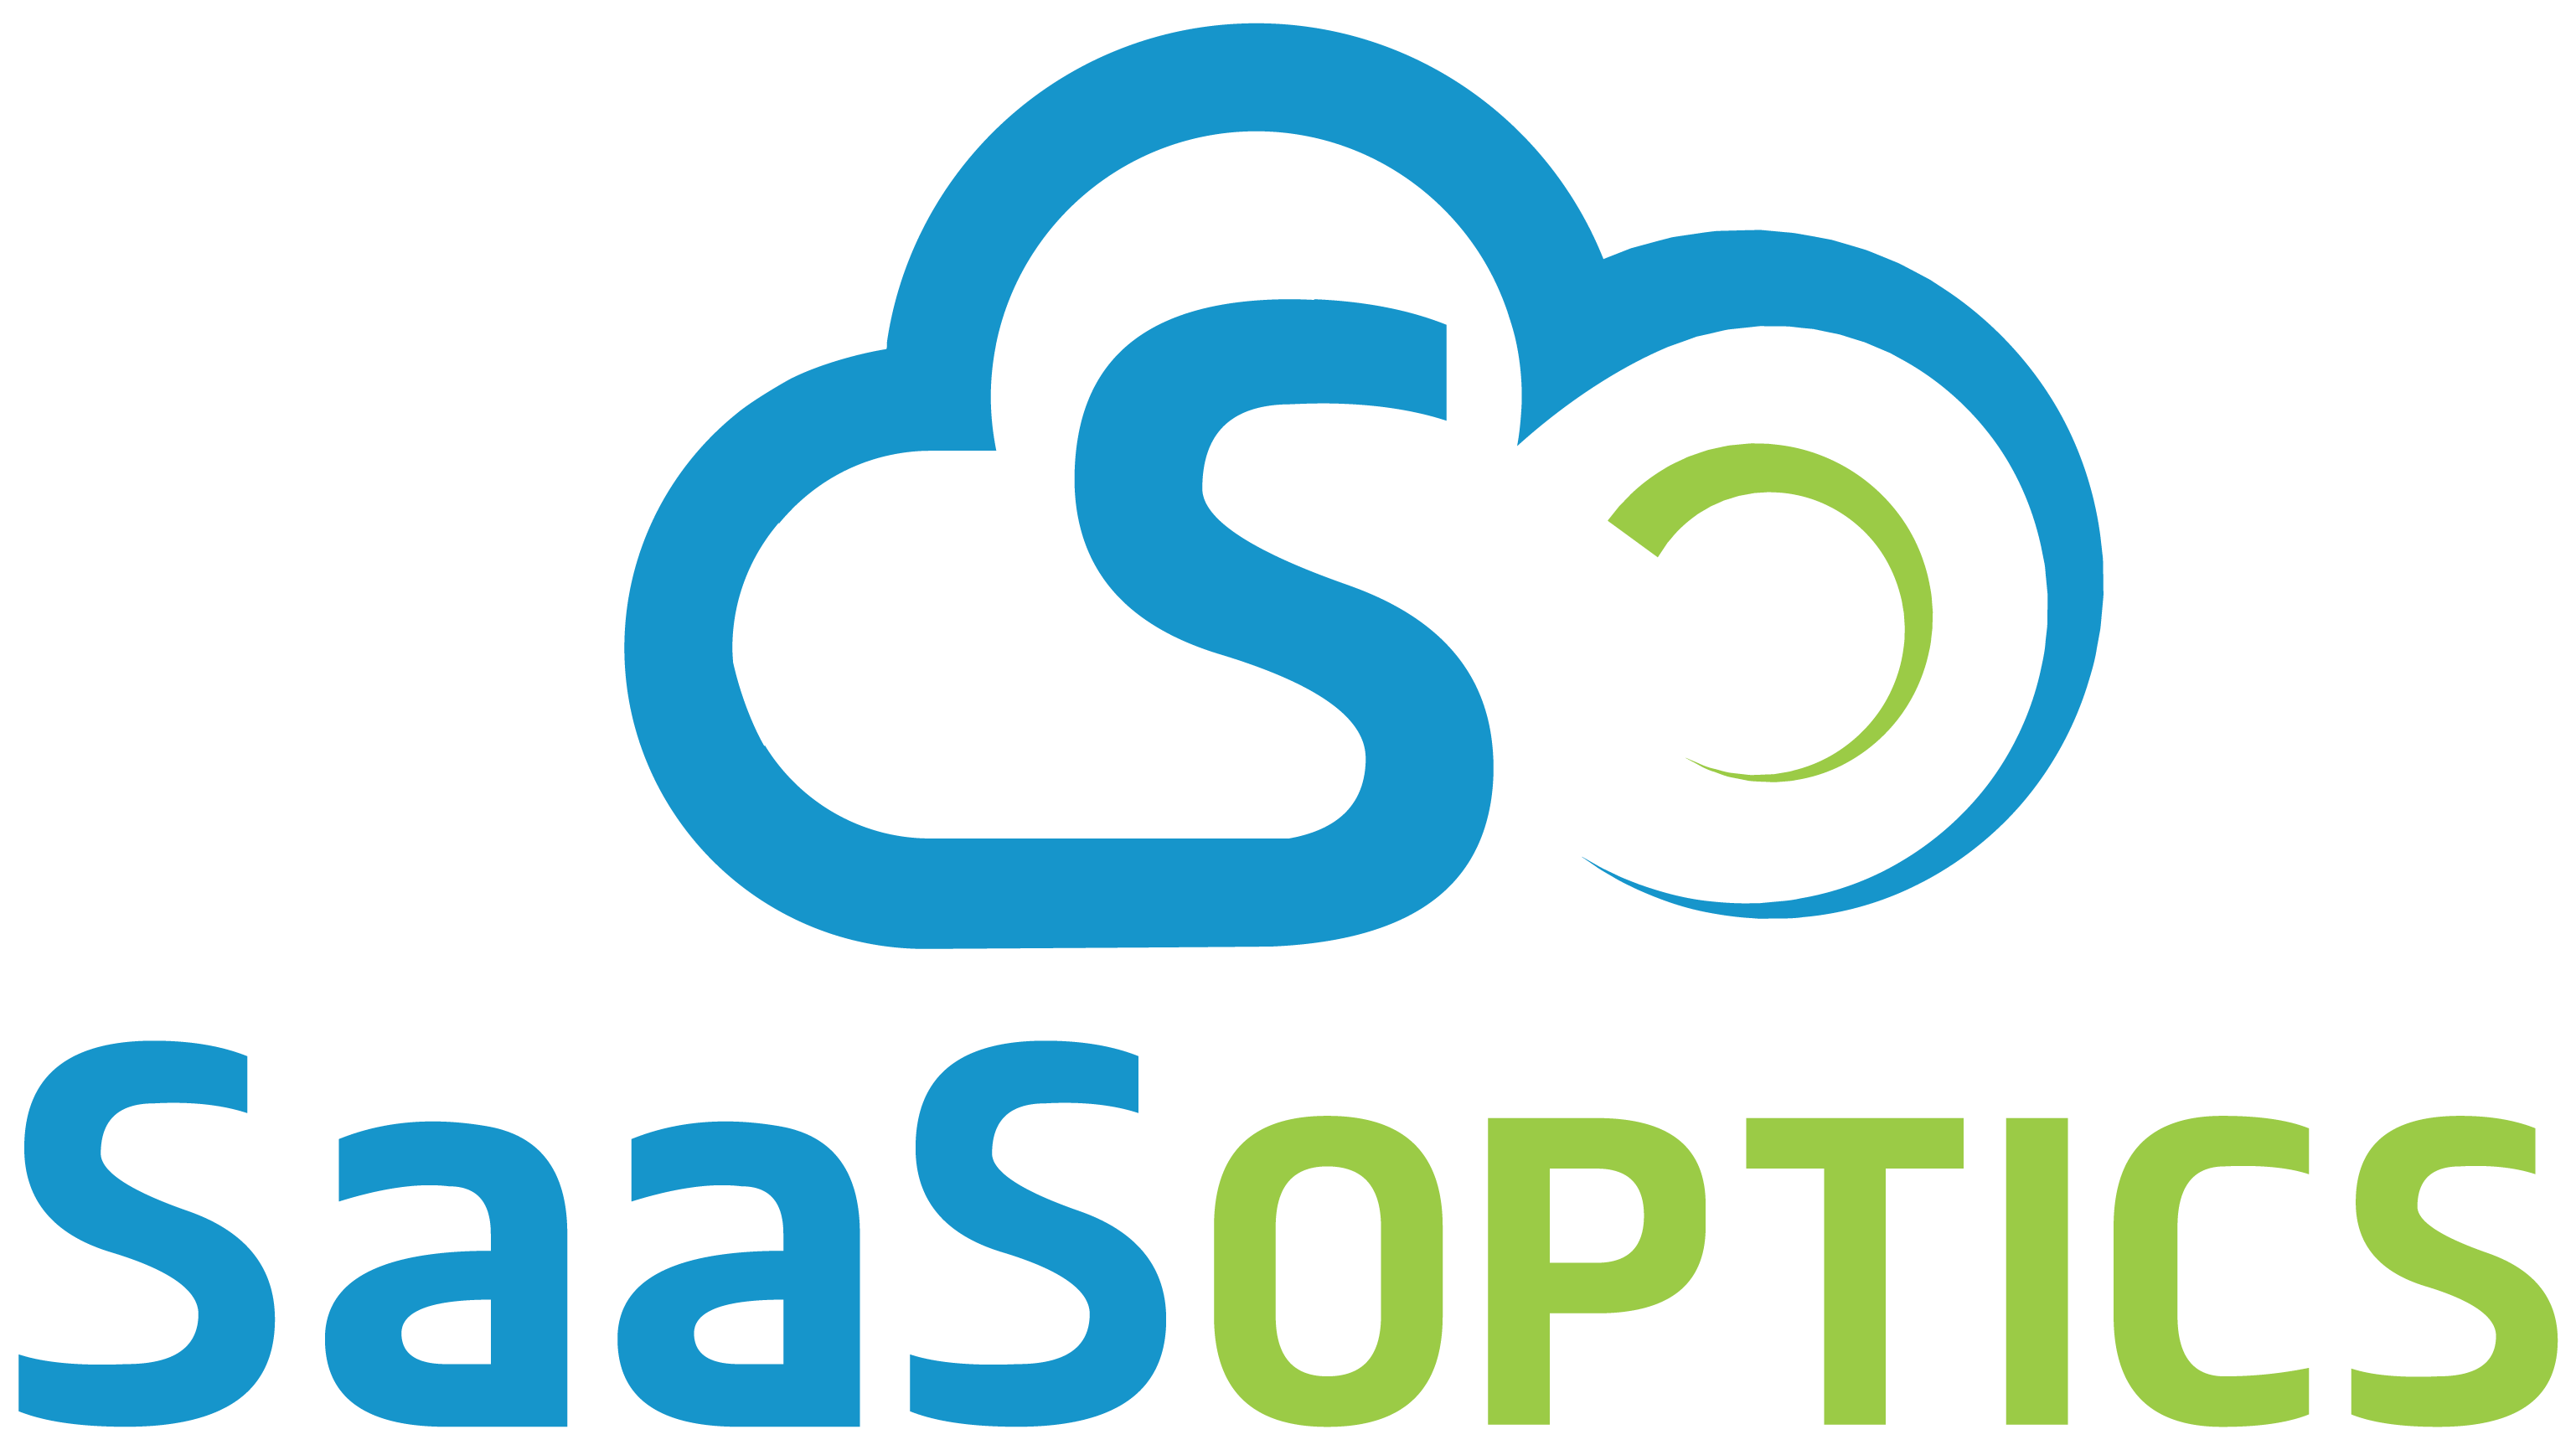 SaaSOptics logo